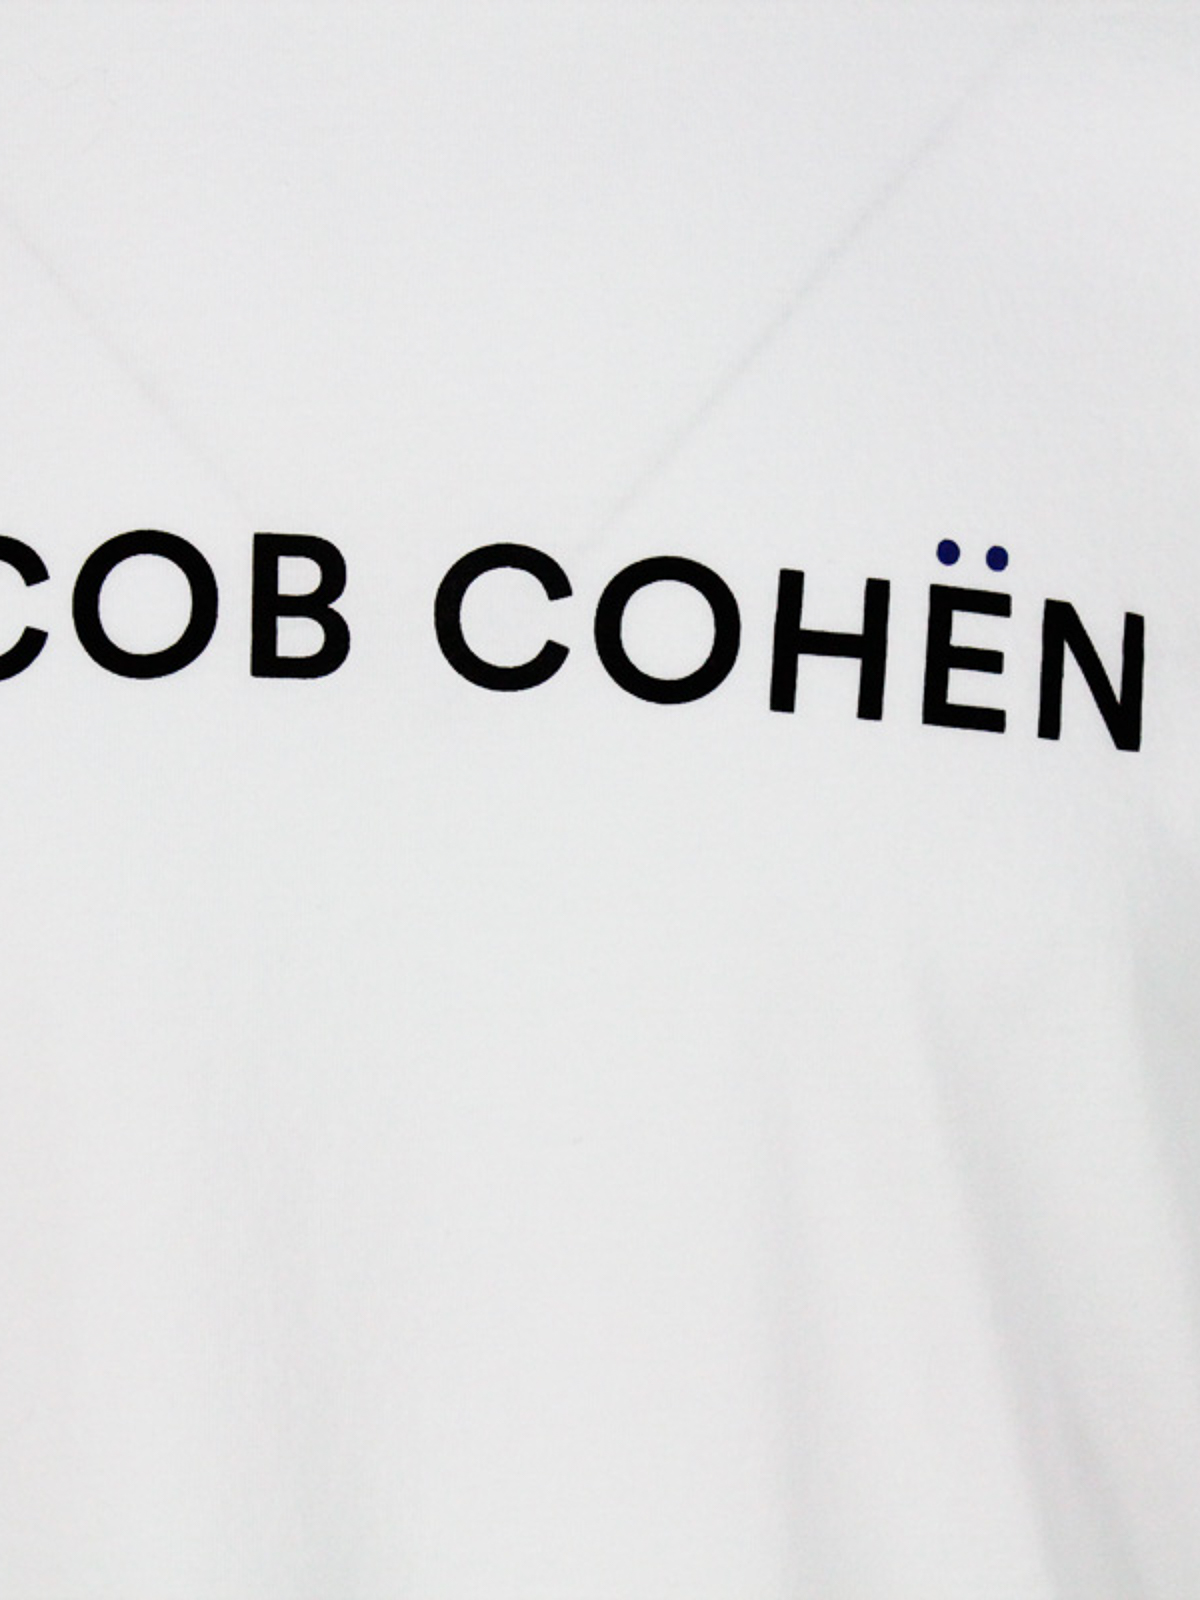 Shop Jacob Cohen T-shirts And Polos White